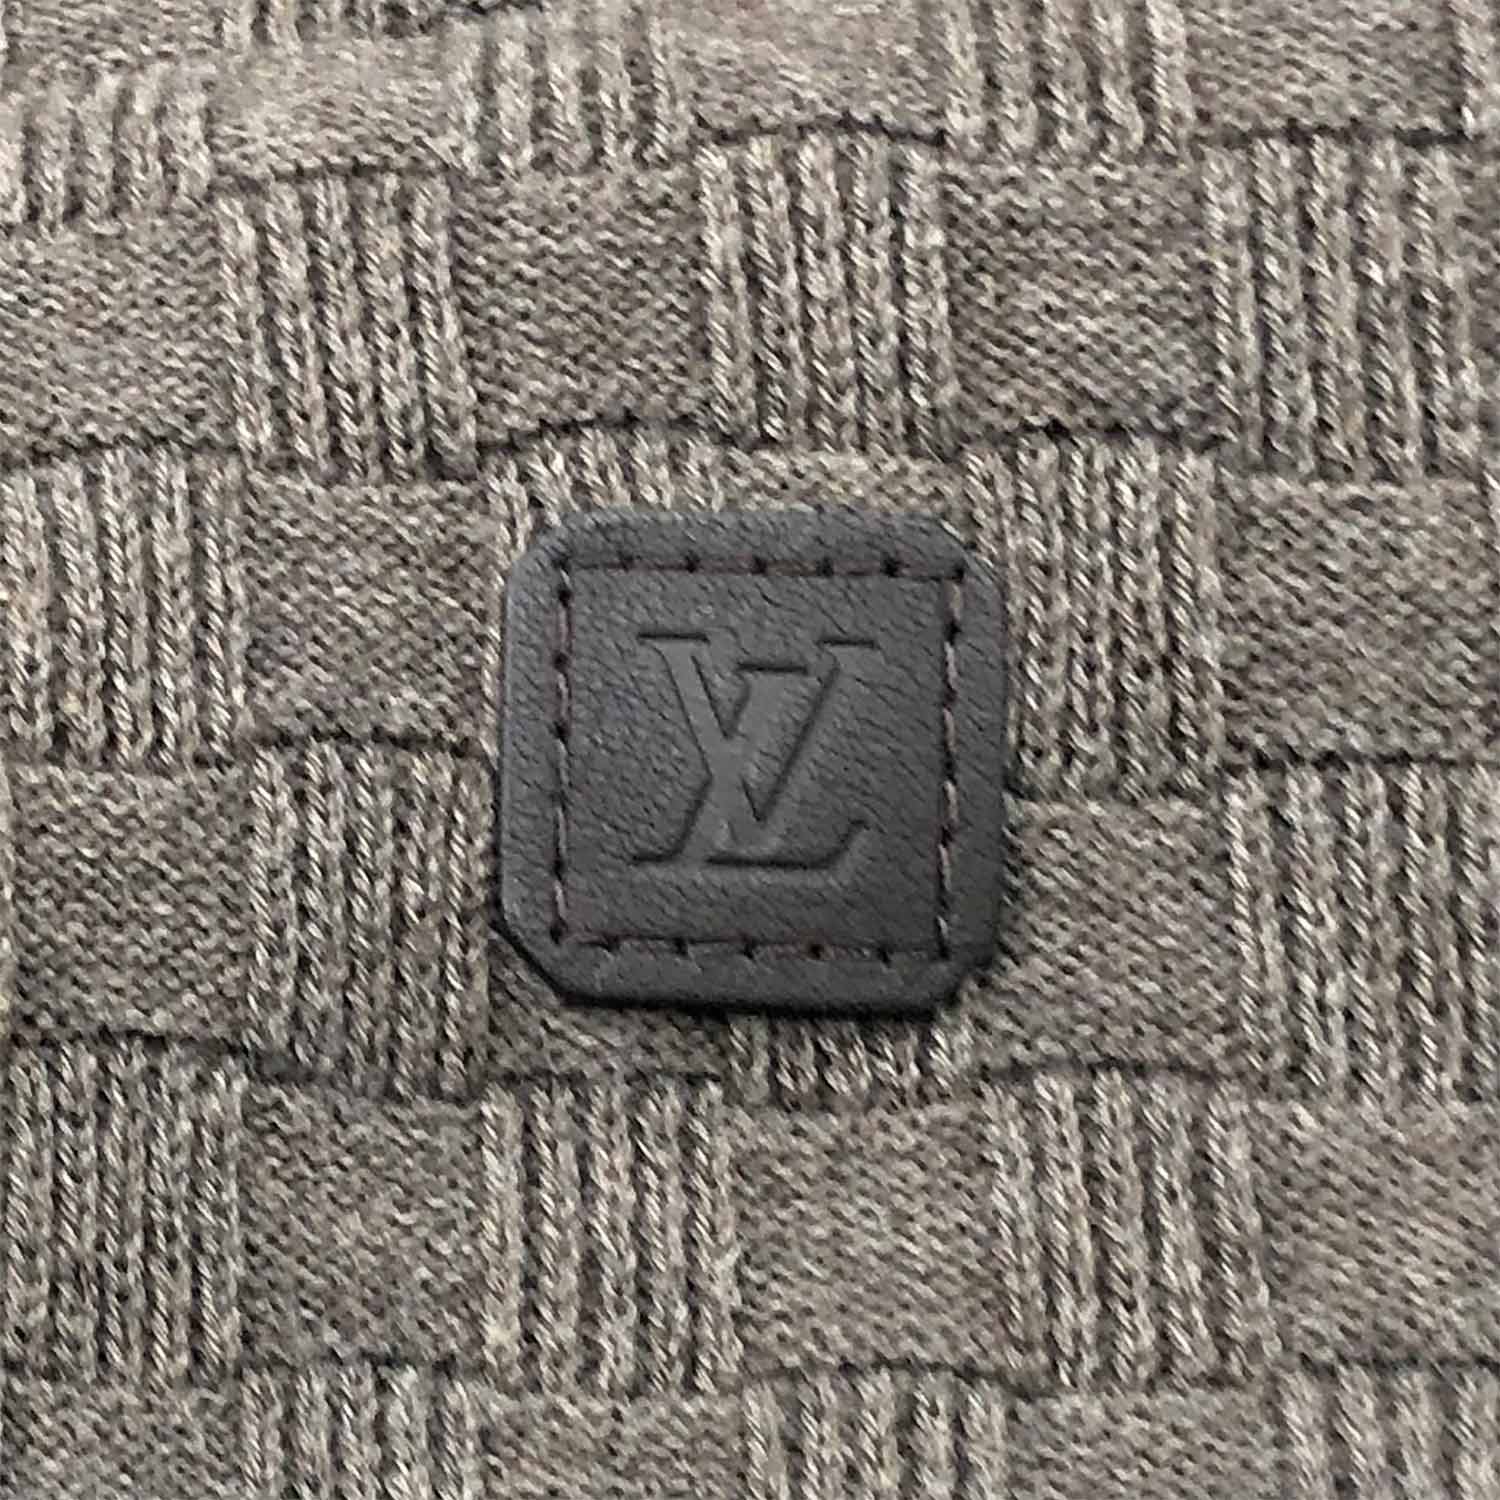 Louis Vuitton damier weave zip cardigan in gris fonce wool blend